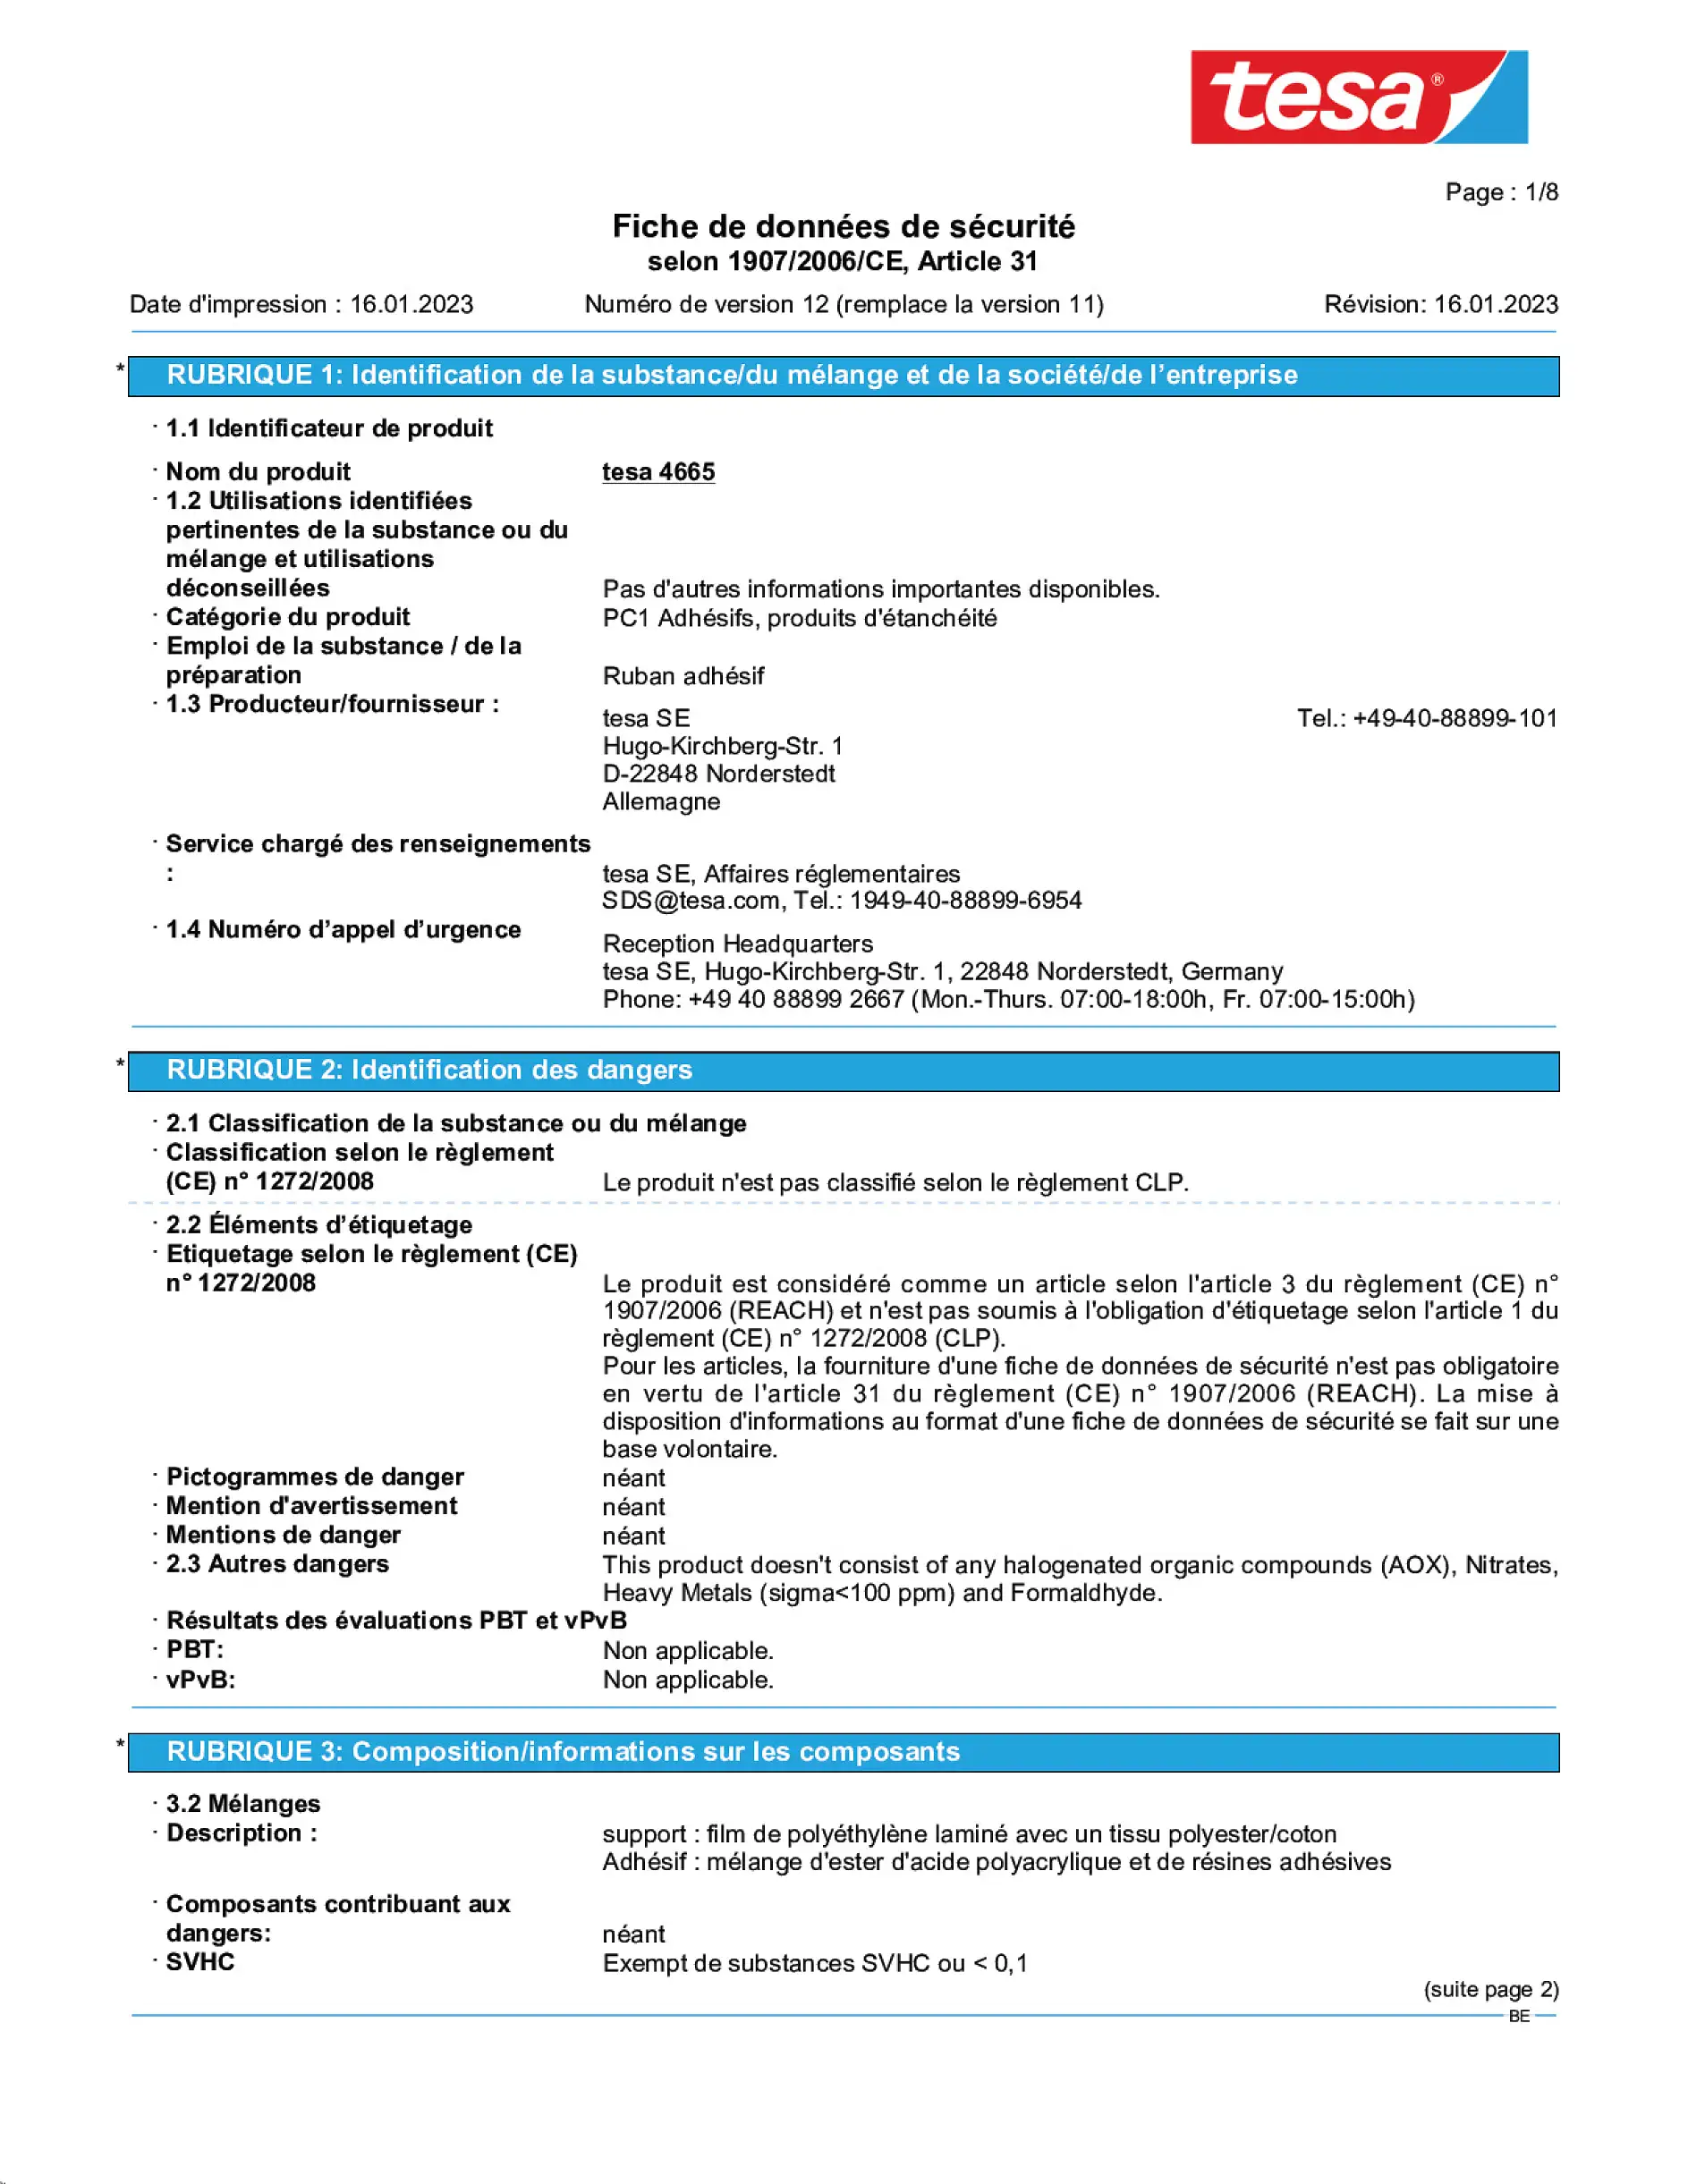 Safety data sheet_tesa® Professional 04665_nl-BE_v12